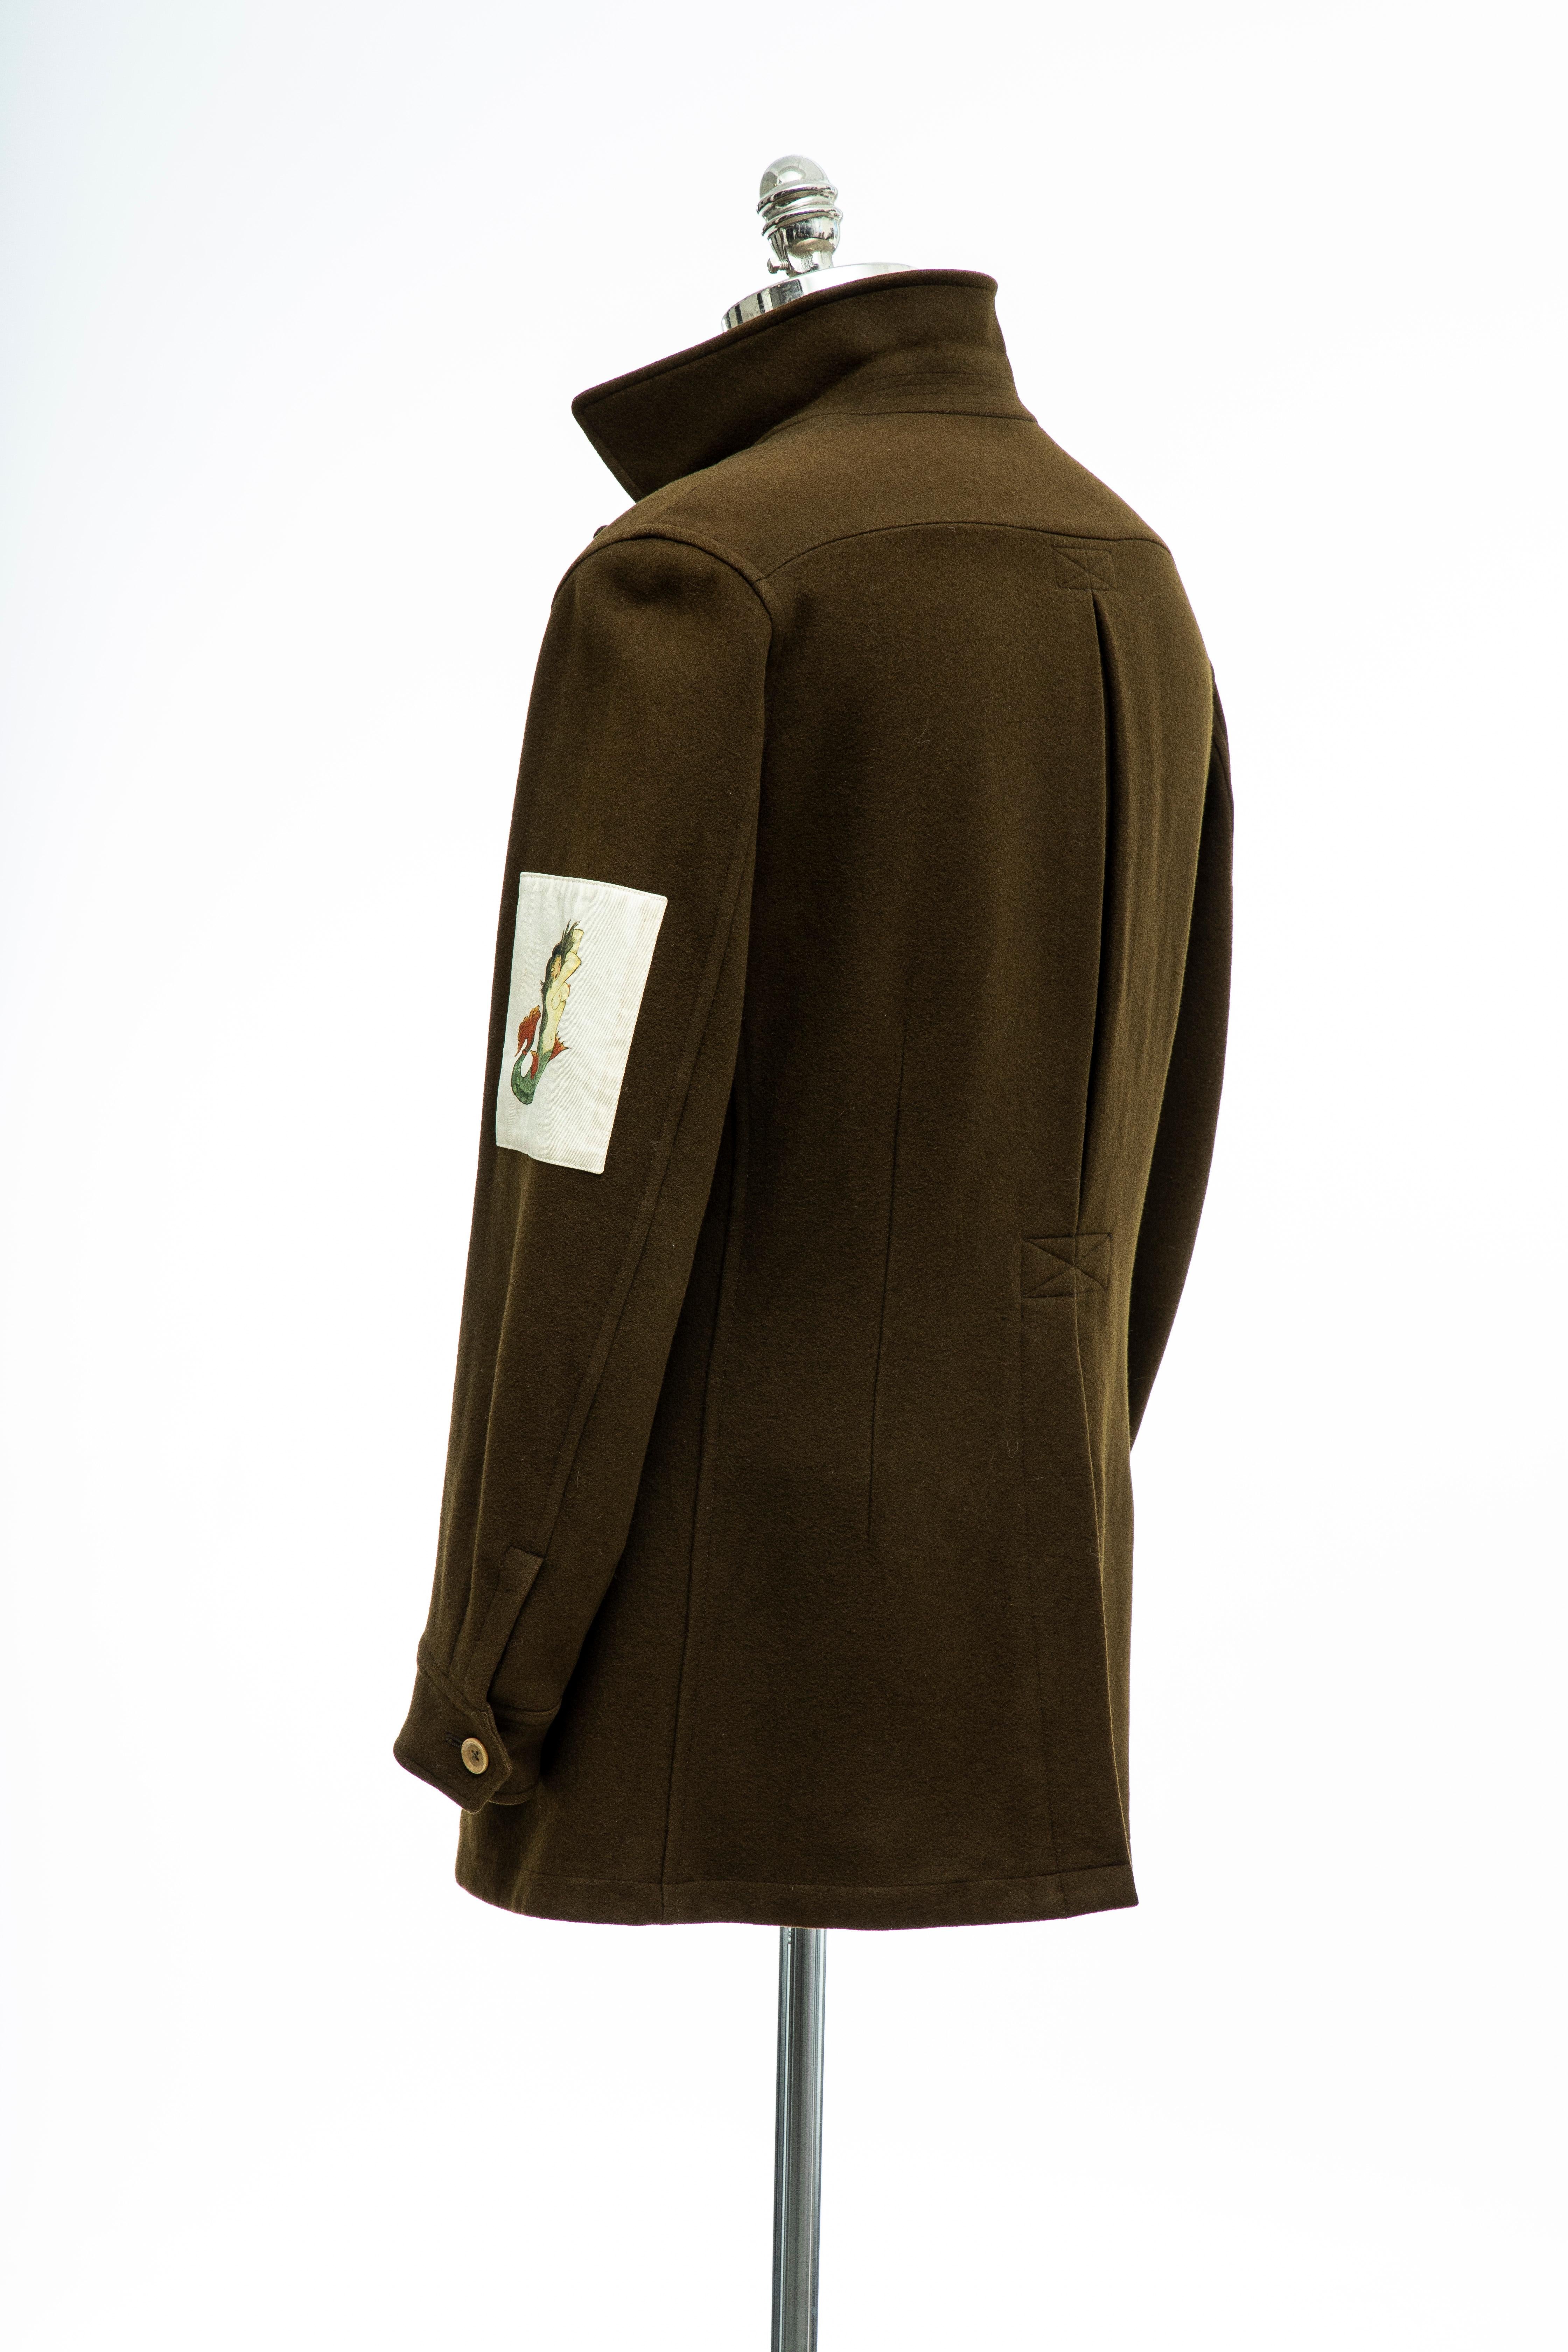 Yohji Yamamoto Pour Homme Men's Wool & Cashmere Printed Patch Jacket, Fall 2003 5